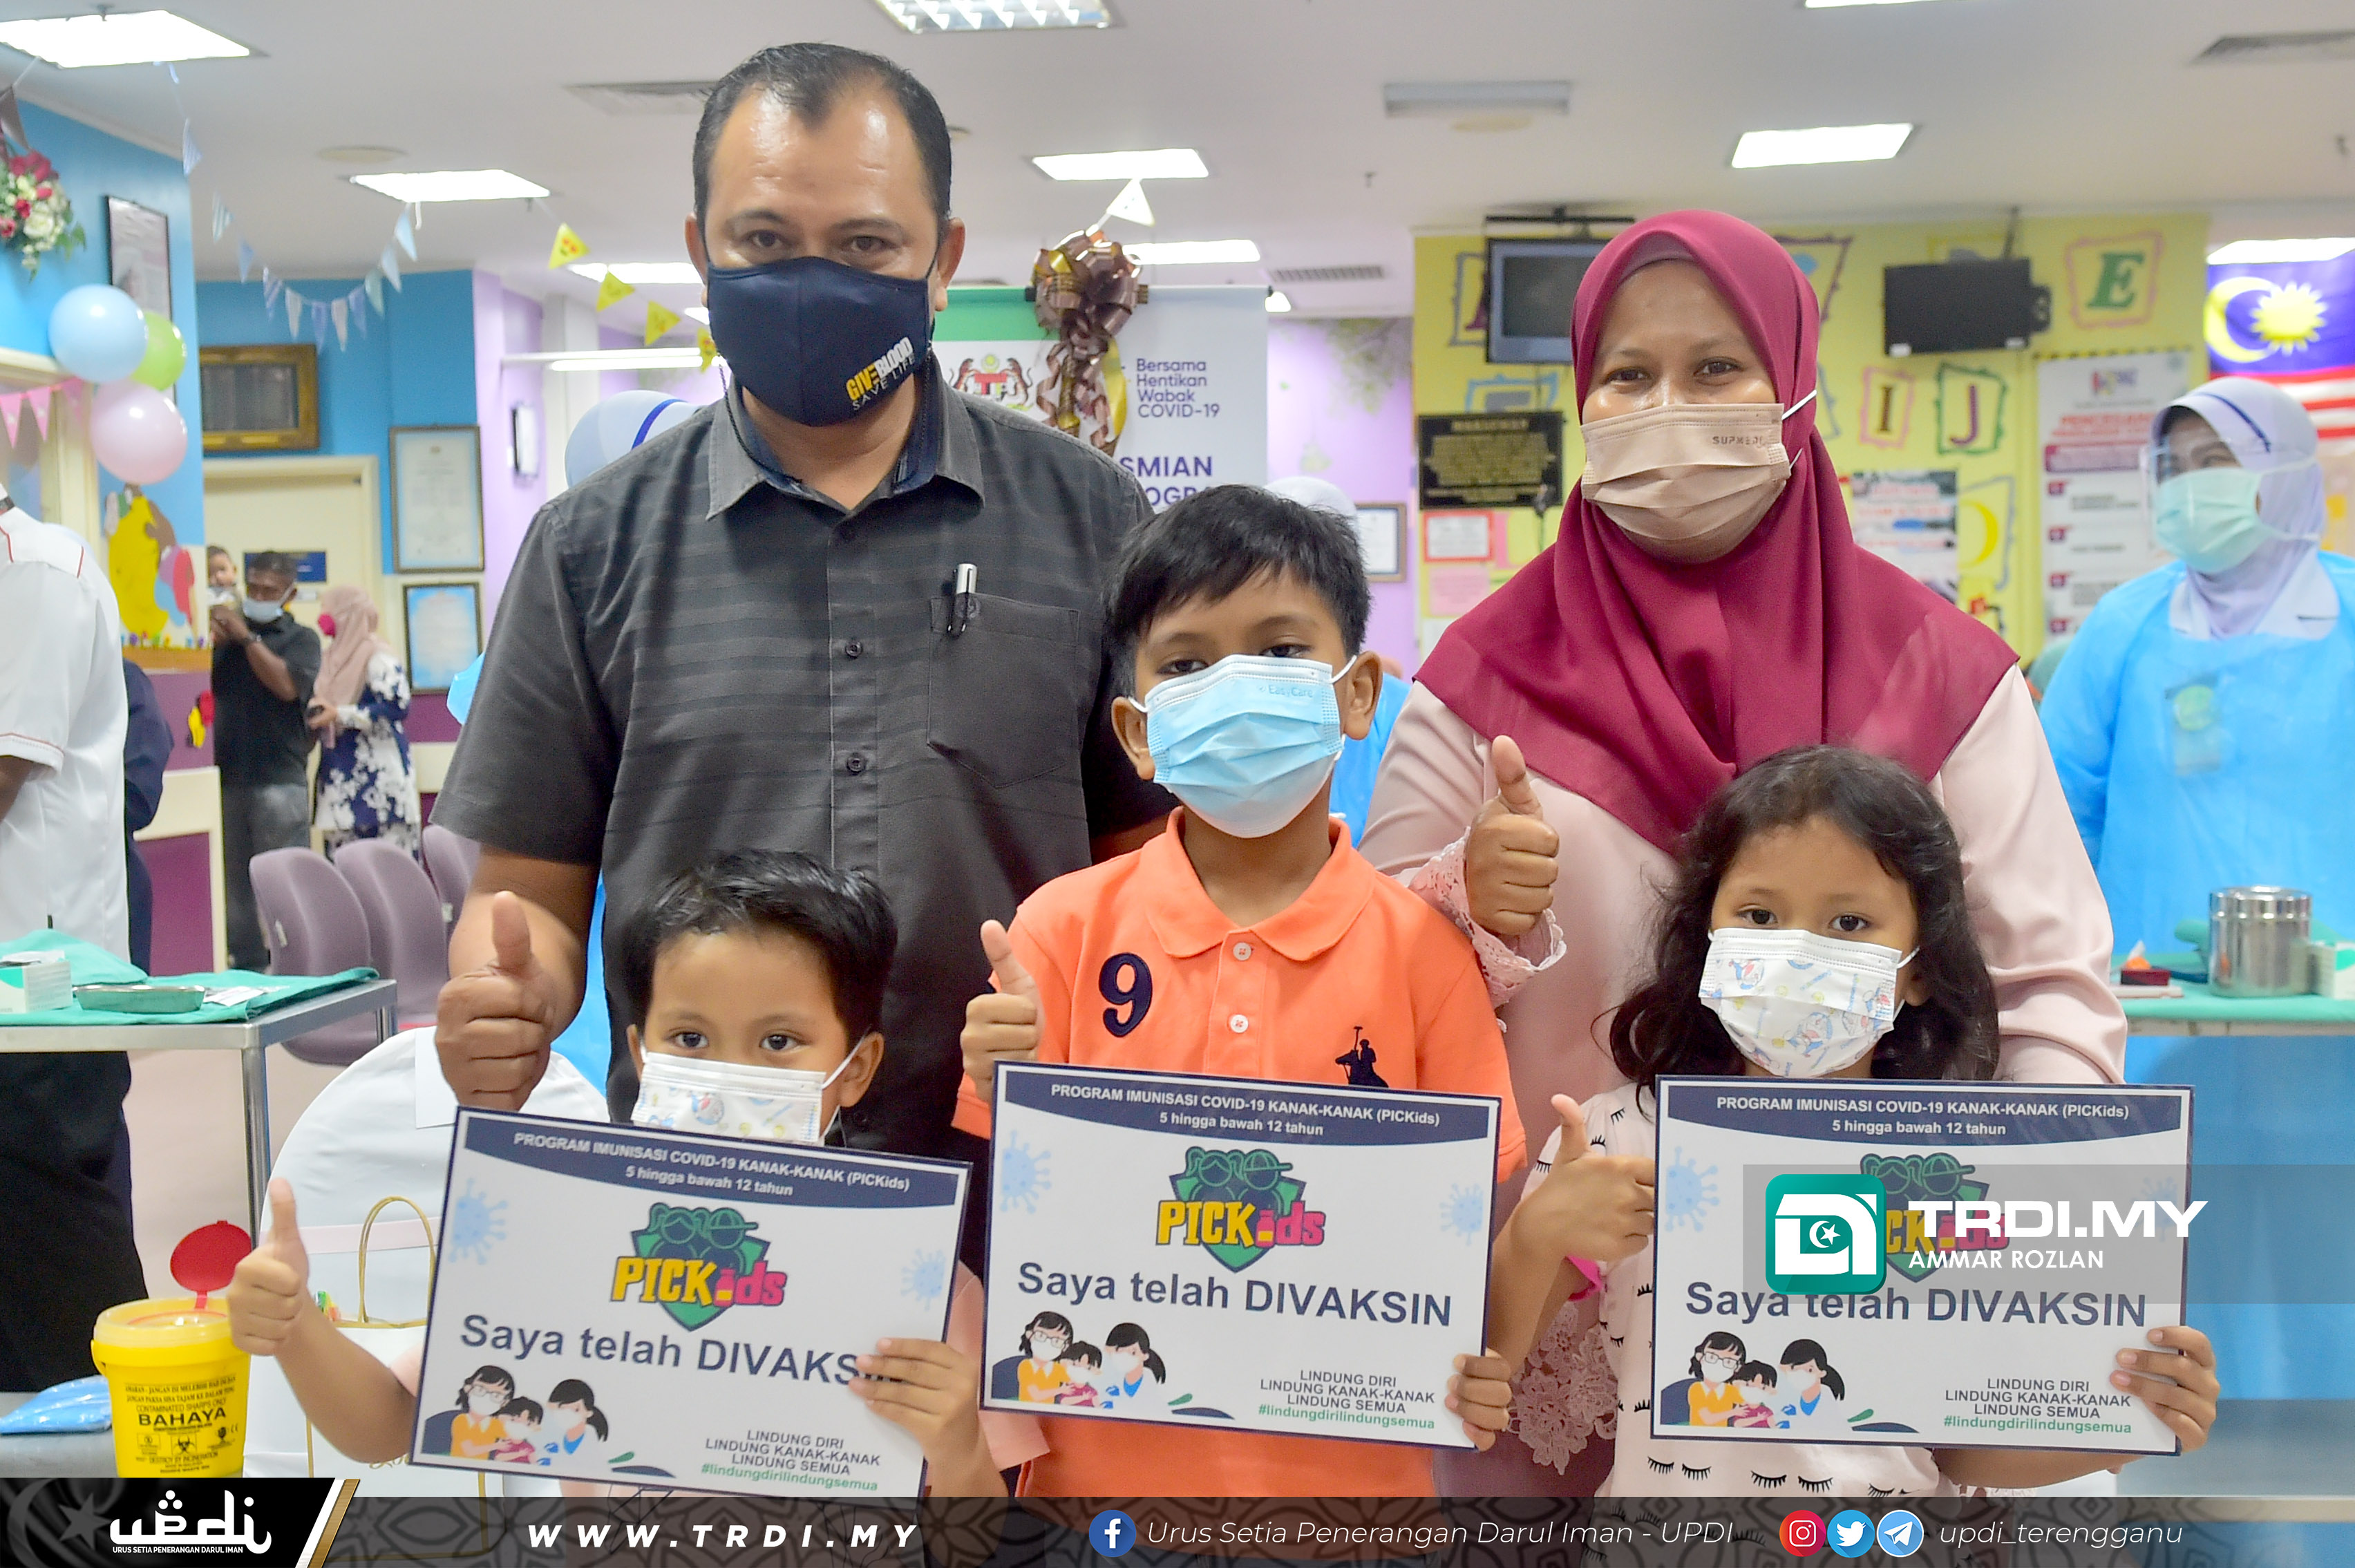  Majlis Pelancaran Program Imunisasi Covid-19 Kanak-kanak (PICKIDS) Terengganu di HSNZ